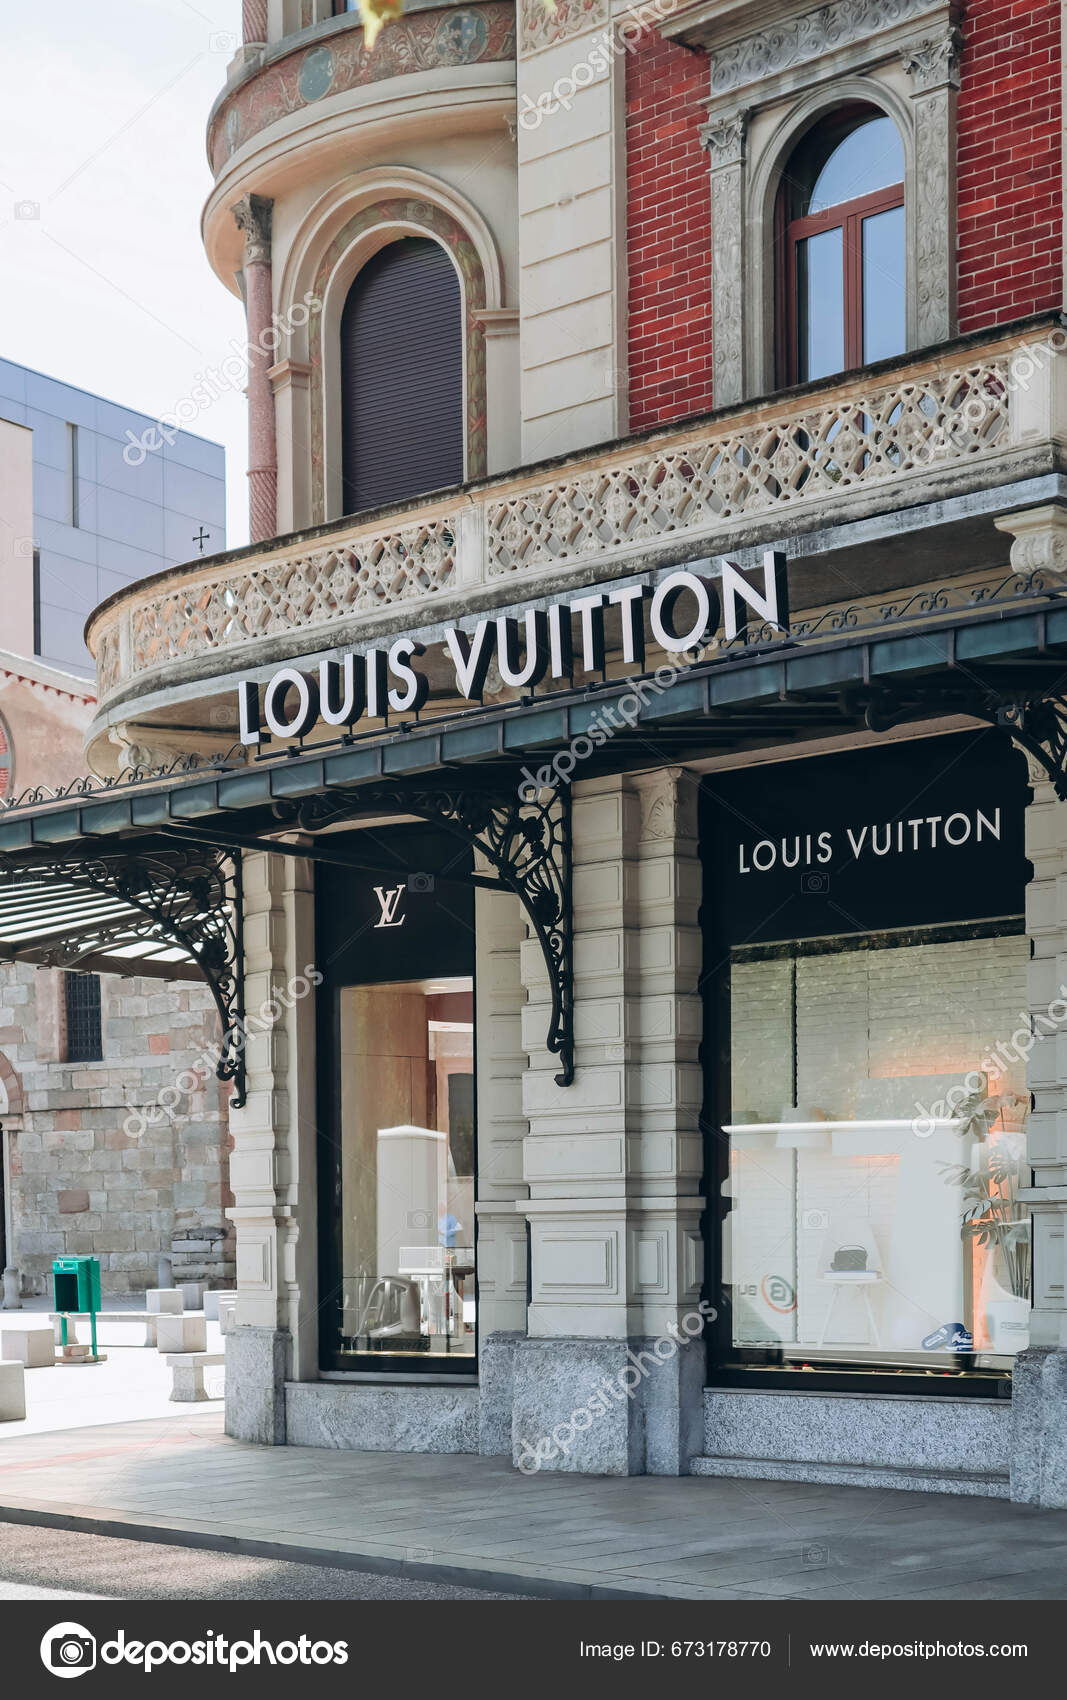 Louis Vuitton store in Monte Carlo, Monaco. Louis Vuitton is a